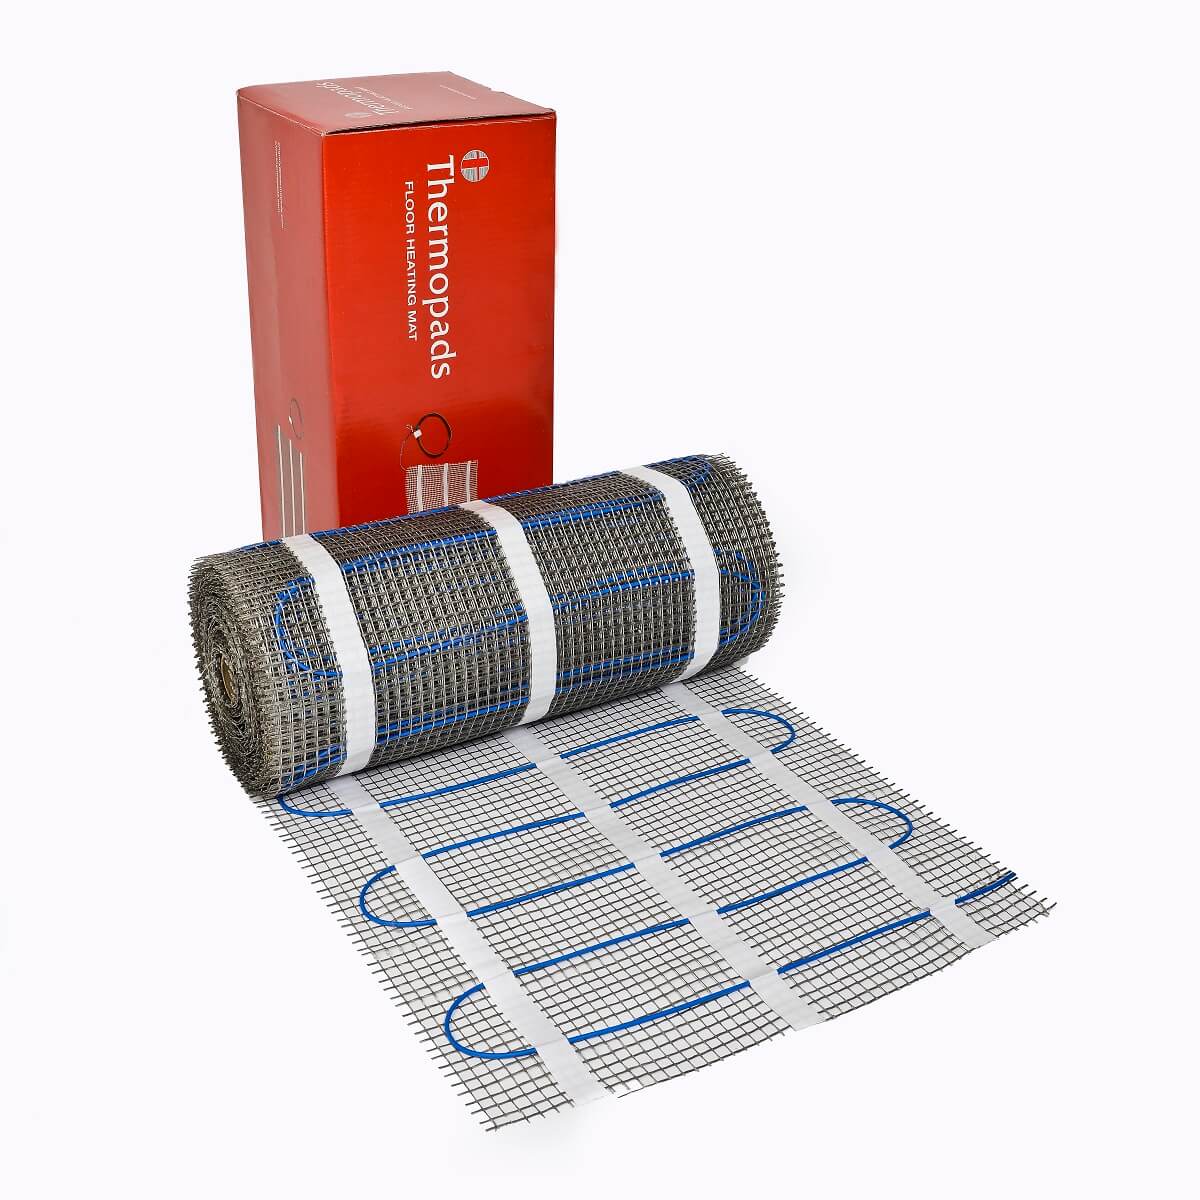 Thermopads Undertile Heating Mat - 10m2 2000W (11181)